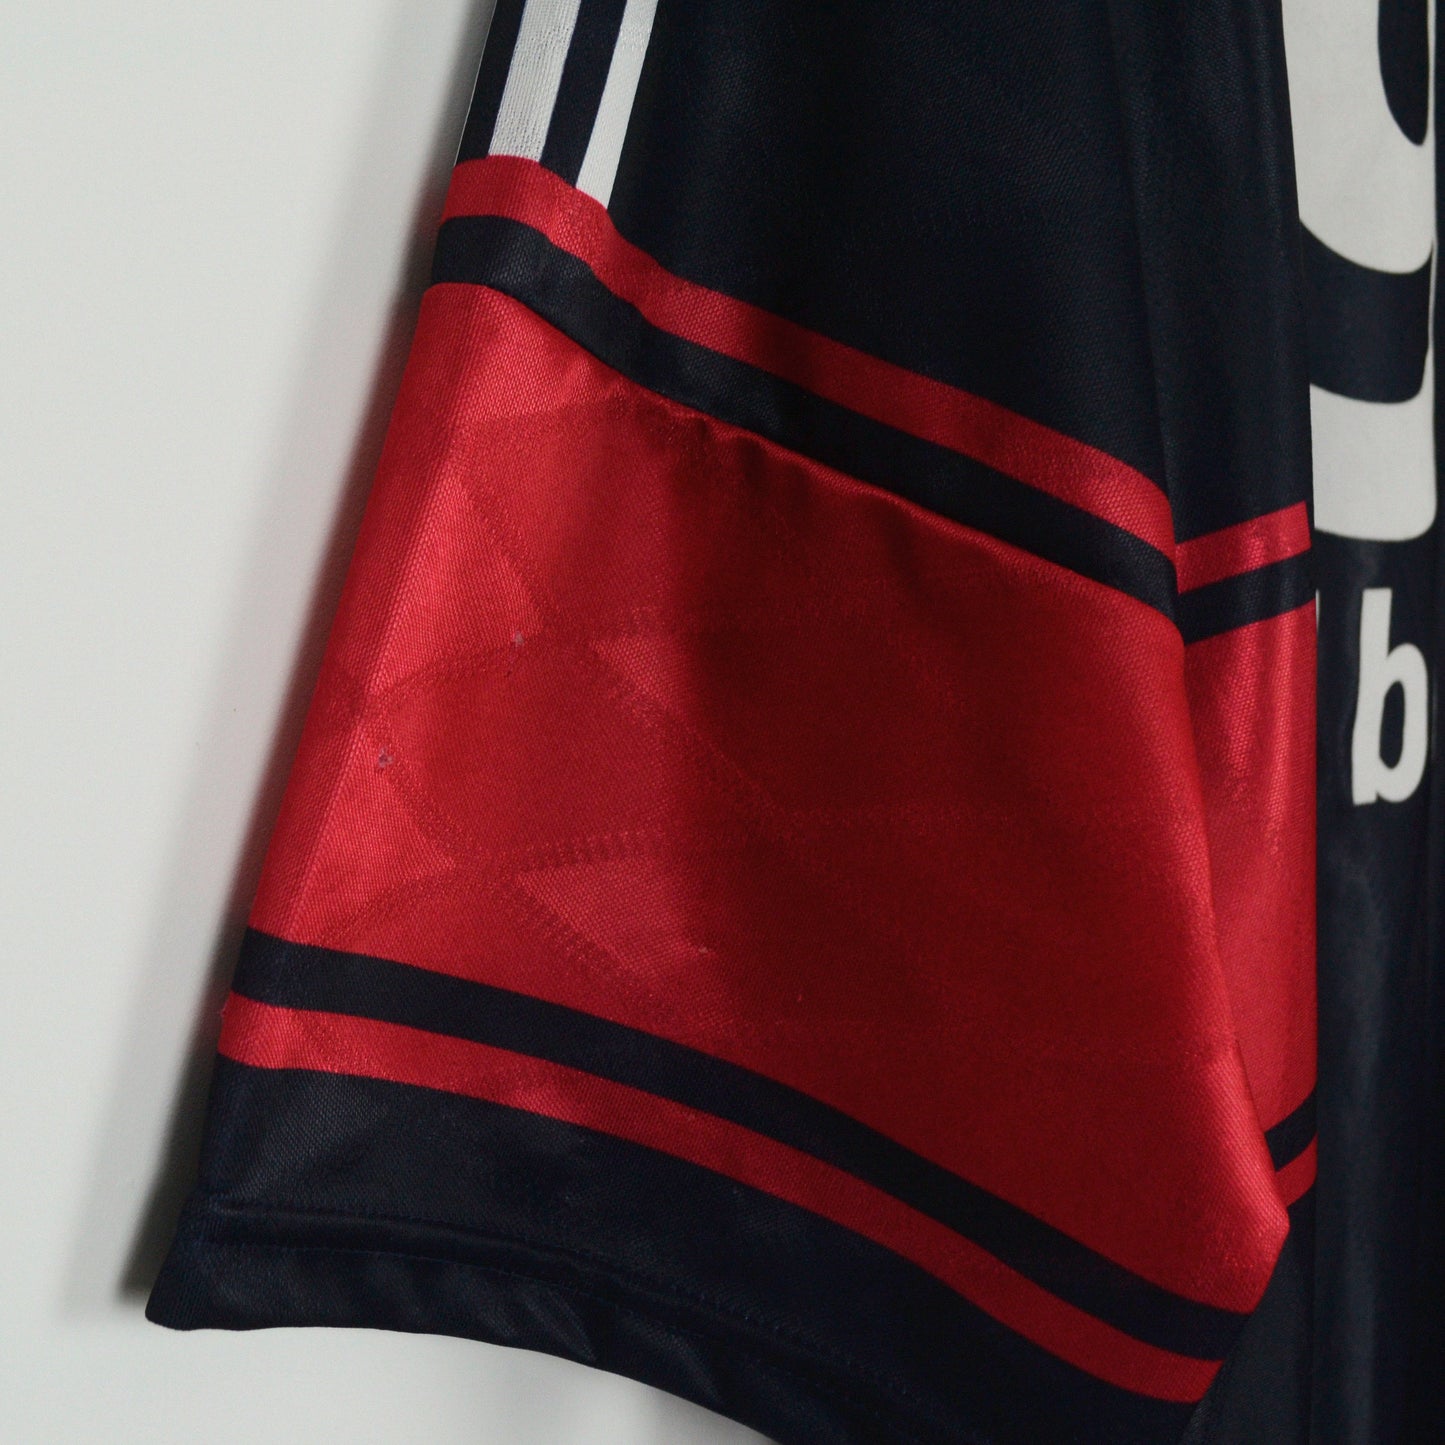 1997-99 Adidas Bayern Munich Home Shirt Elber 9 XL